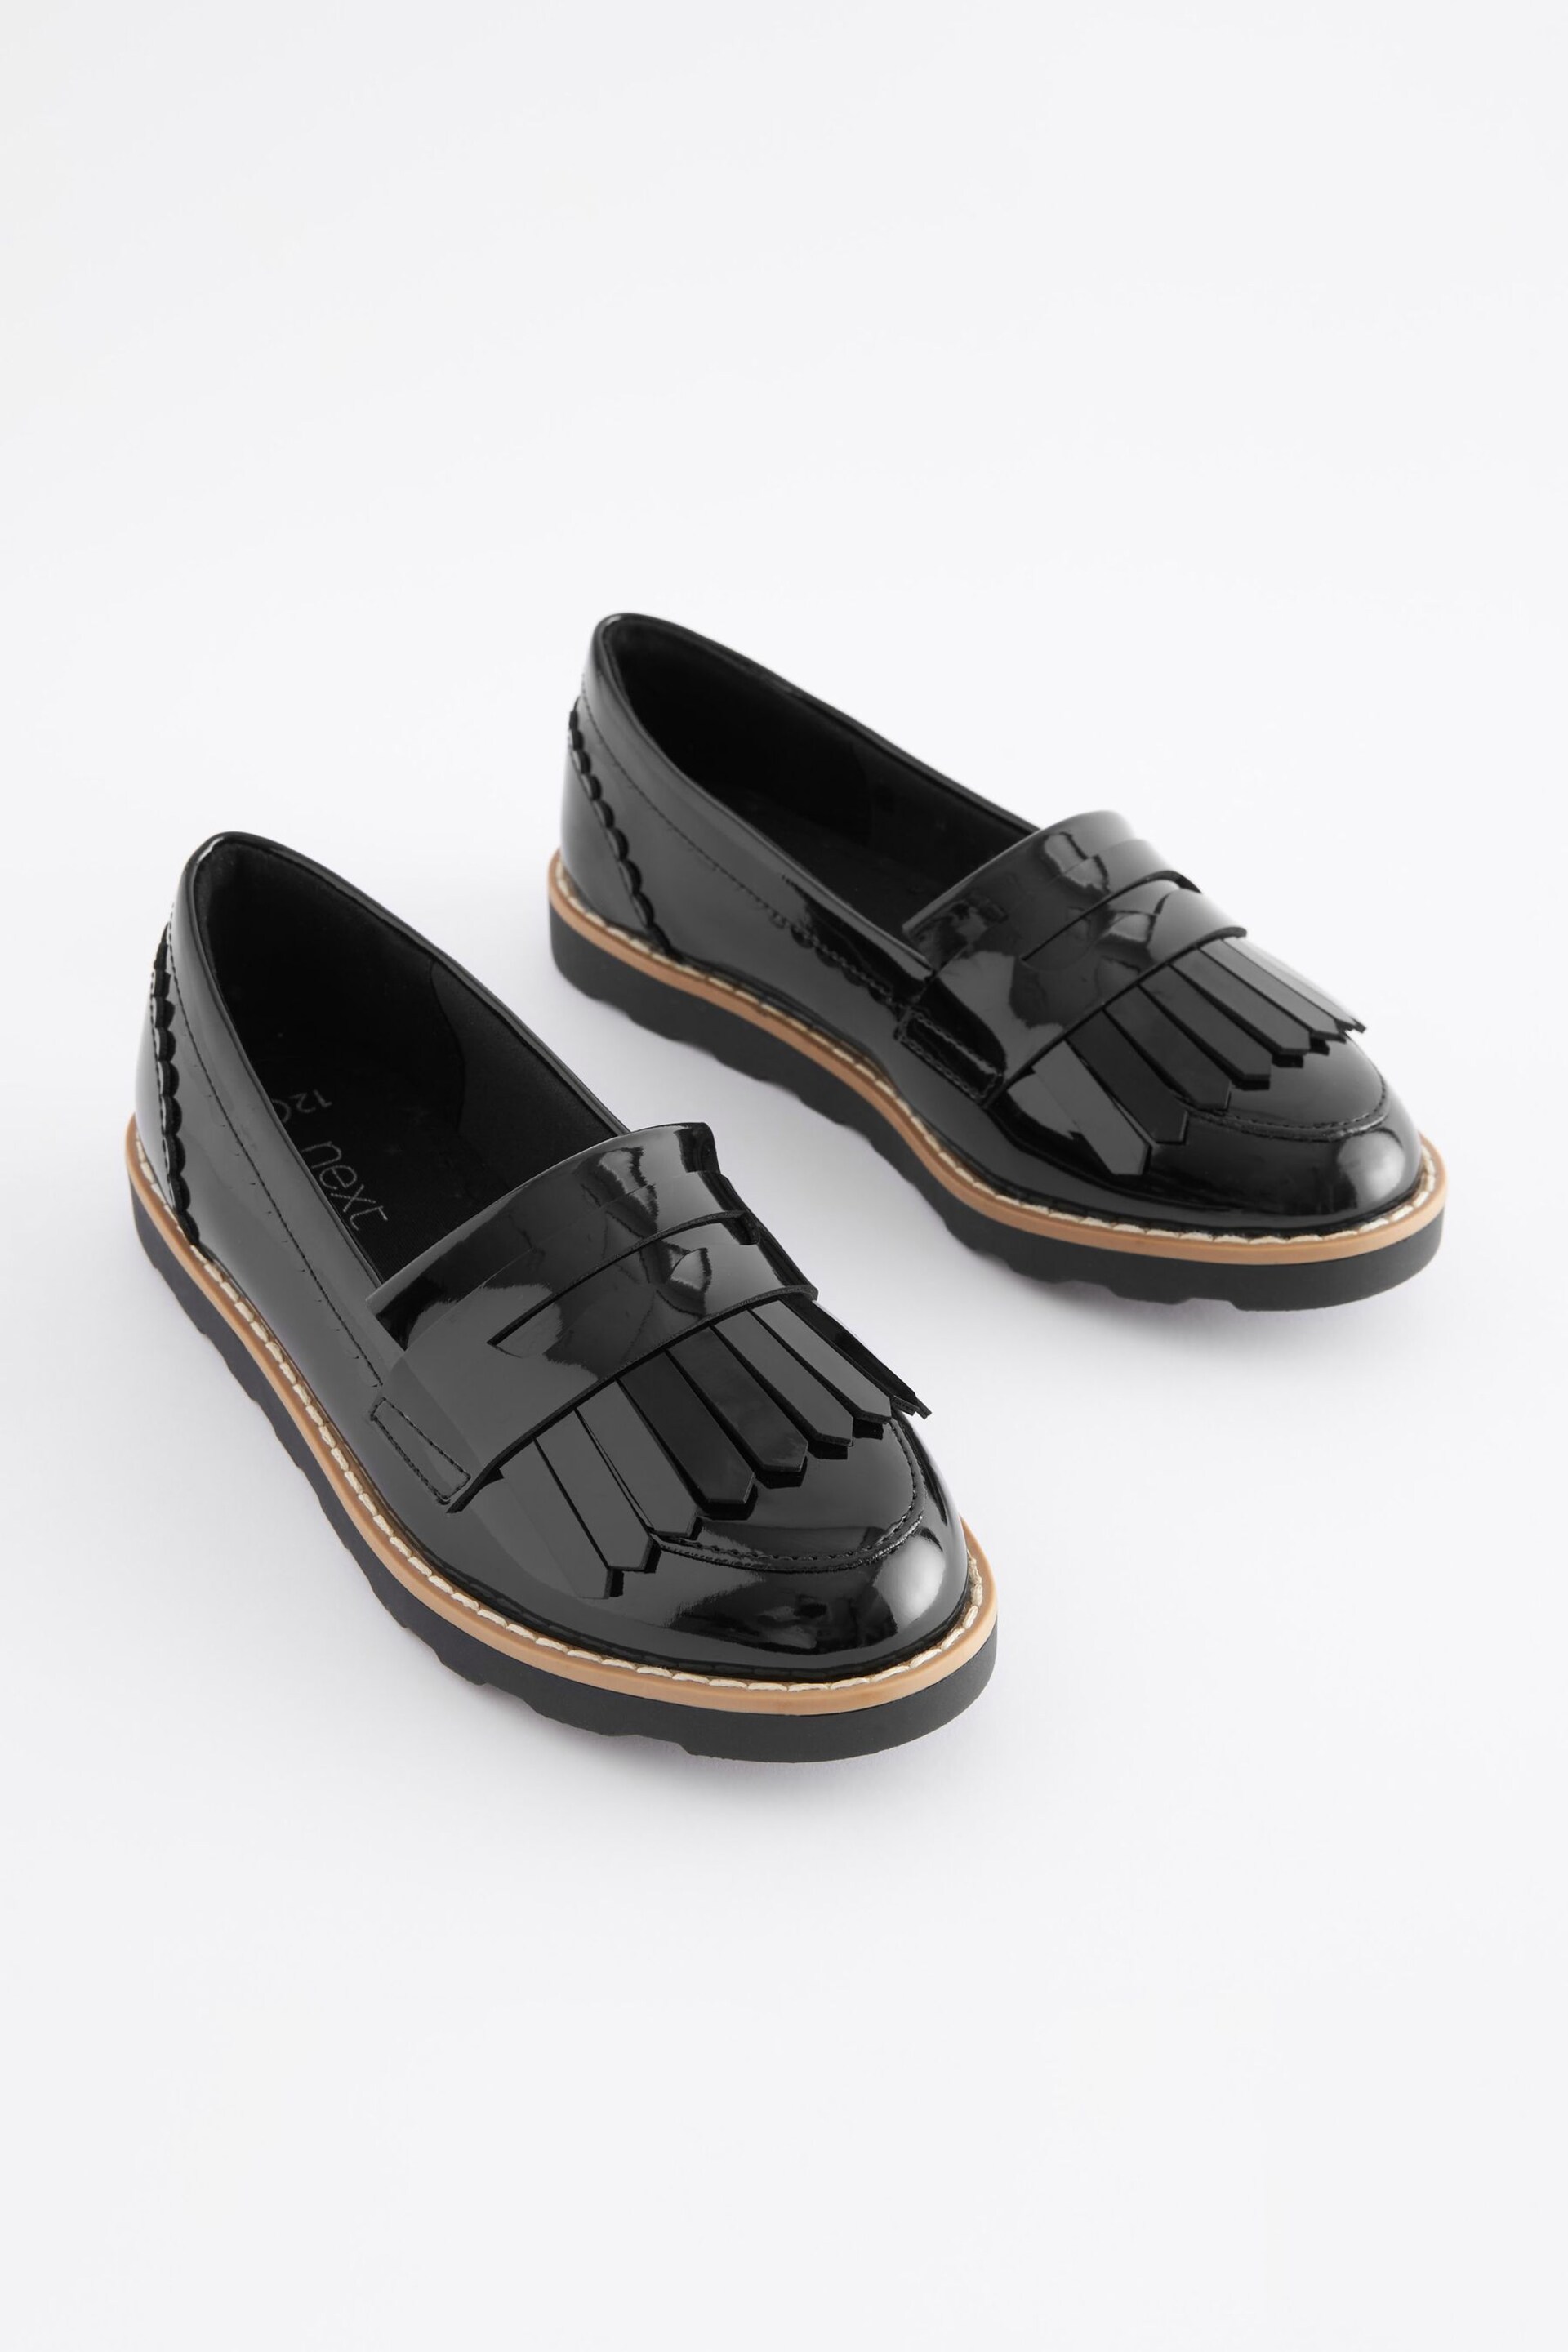 Black Patent Standard Fit (F) School Tassel Loafers - Image 1 of 5